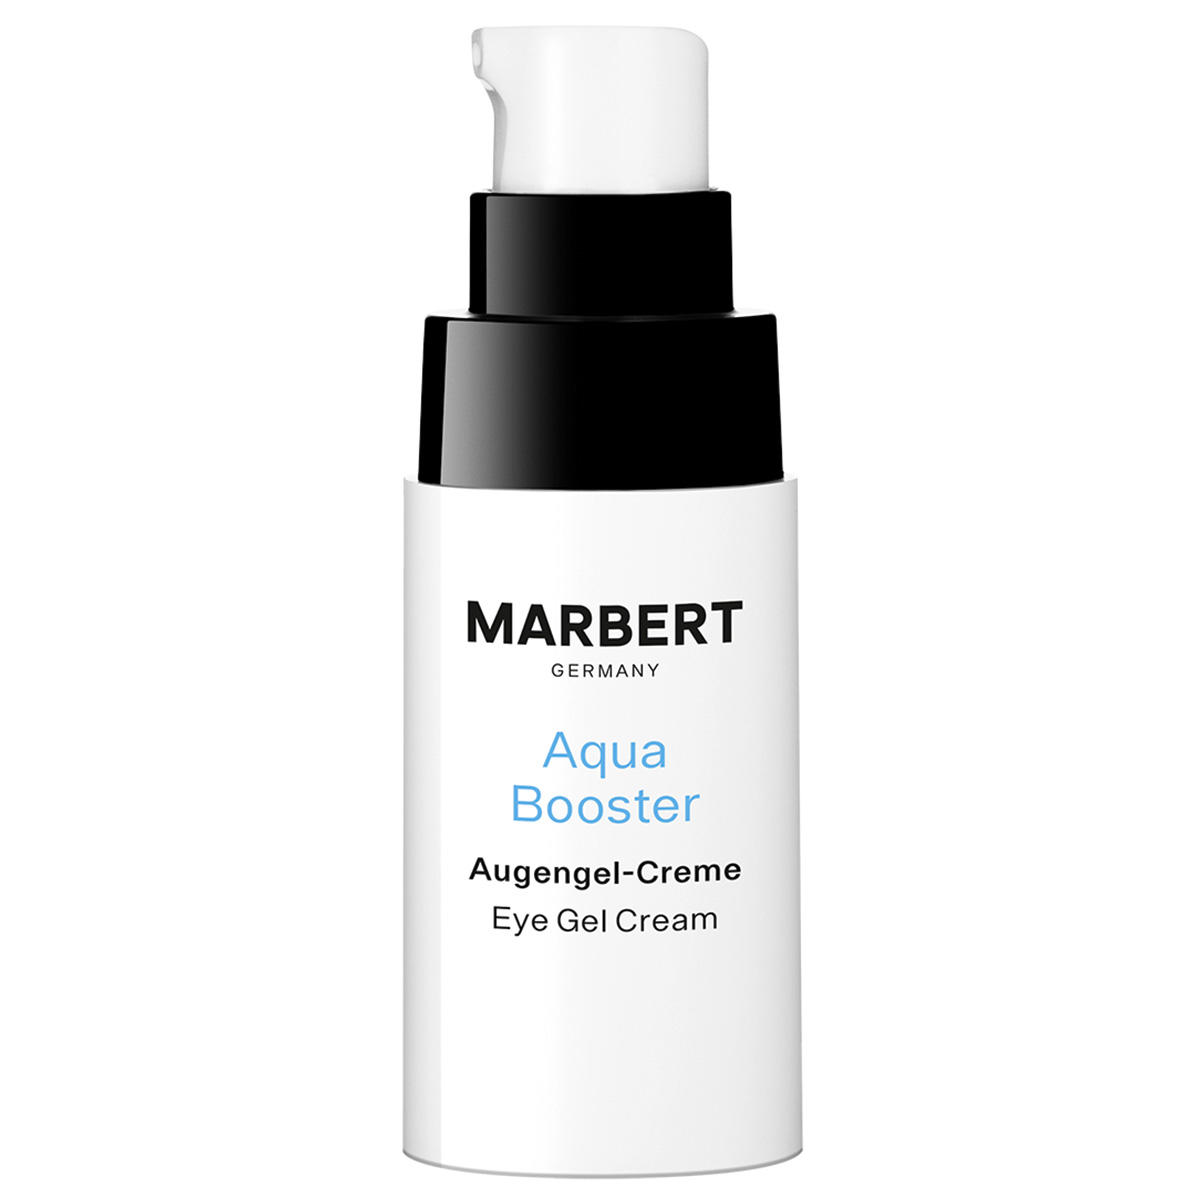 Marbert Aqua Booster Augengel-Creme 15 ml - 2